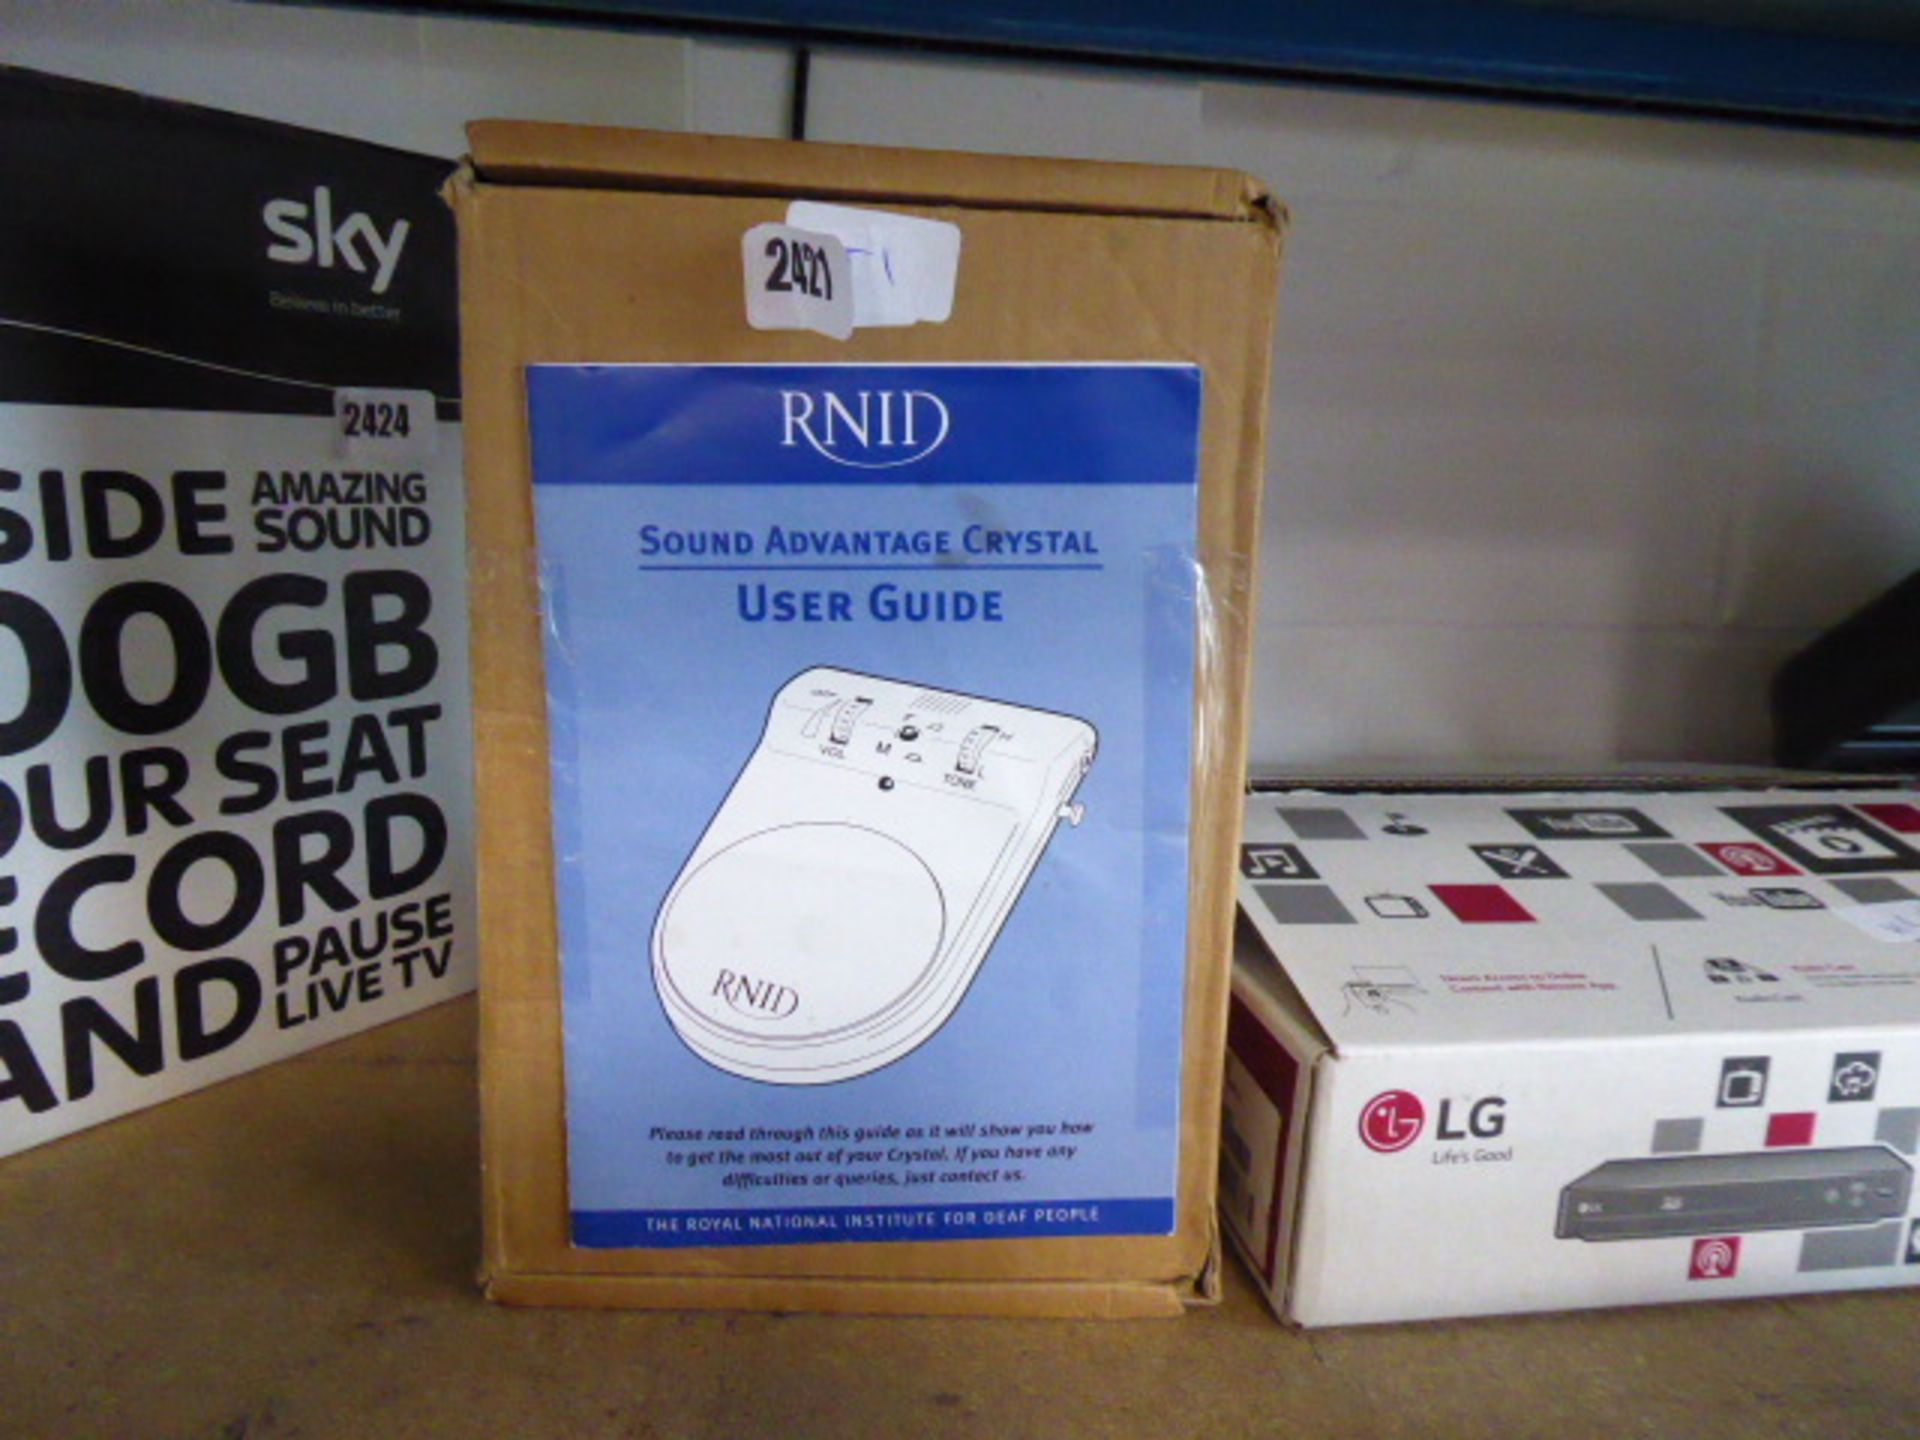 RNID sound advantage kit in box